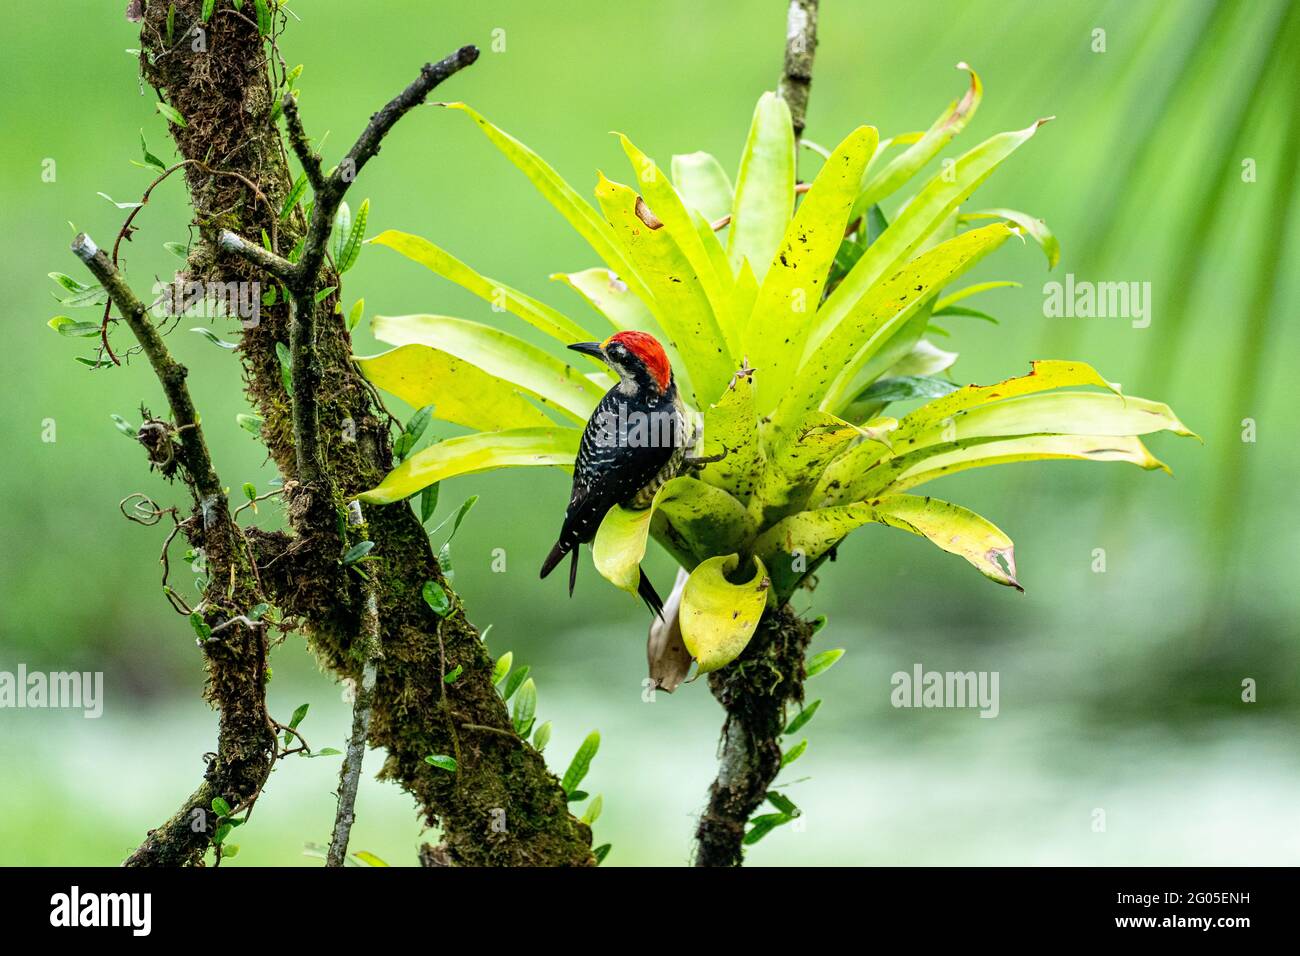 Black-cheeked Woodpecker (Melanerpes pucherani) Stock Photo